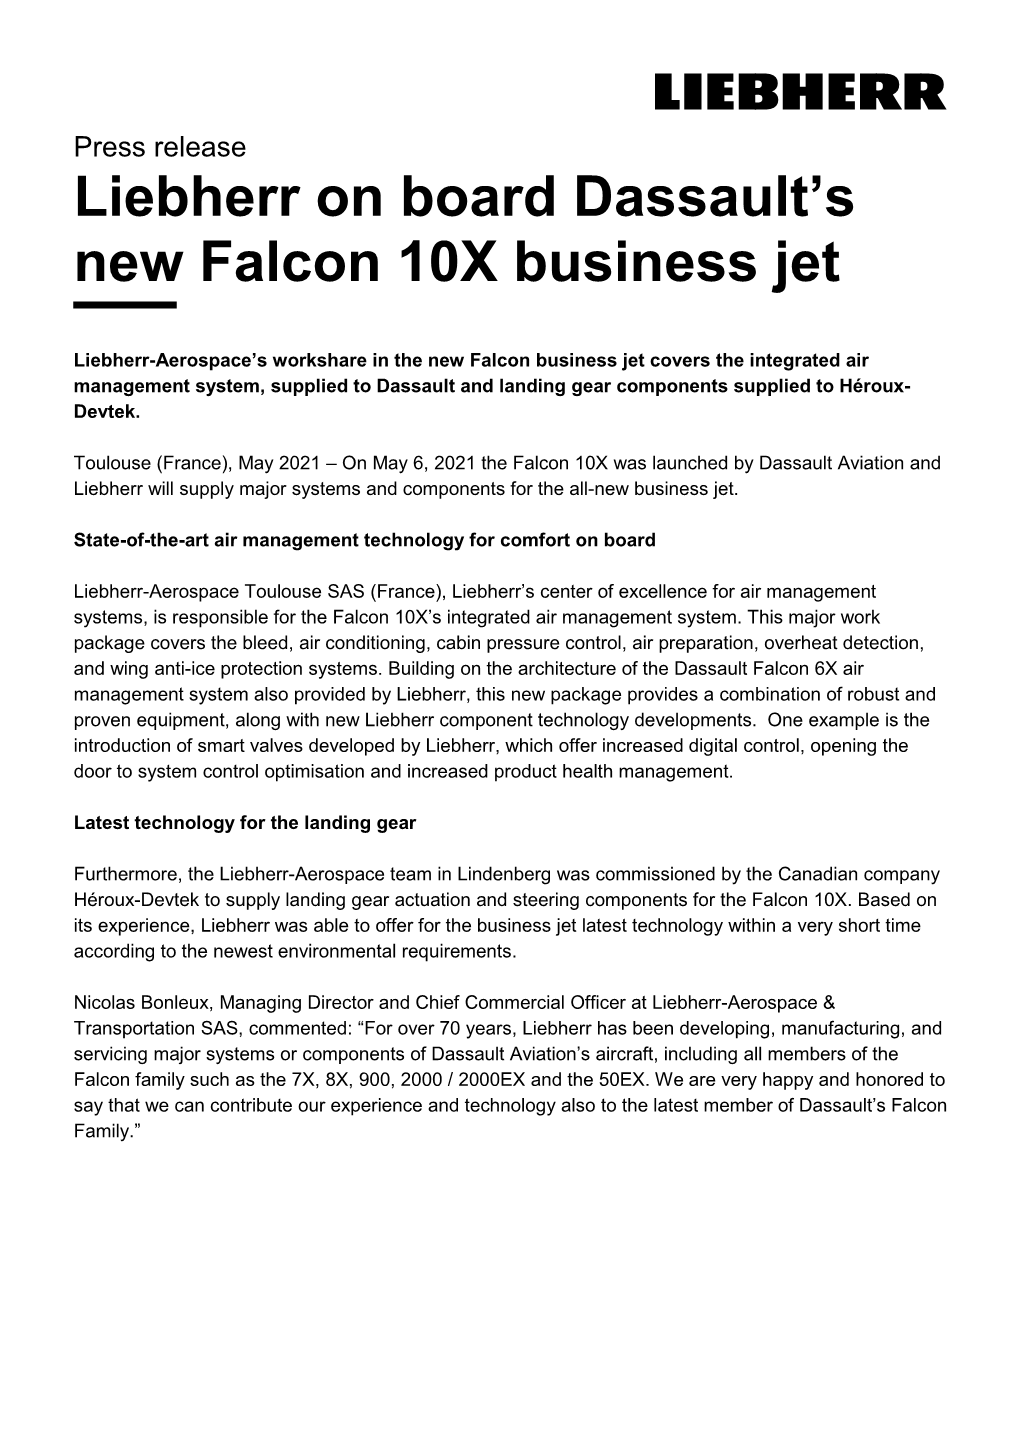 Liebherr on Board Dassault's New Falcon 10X Business